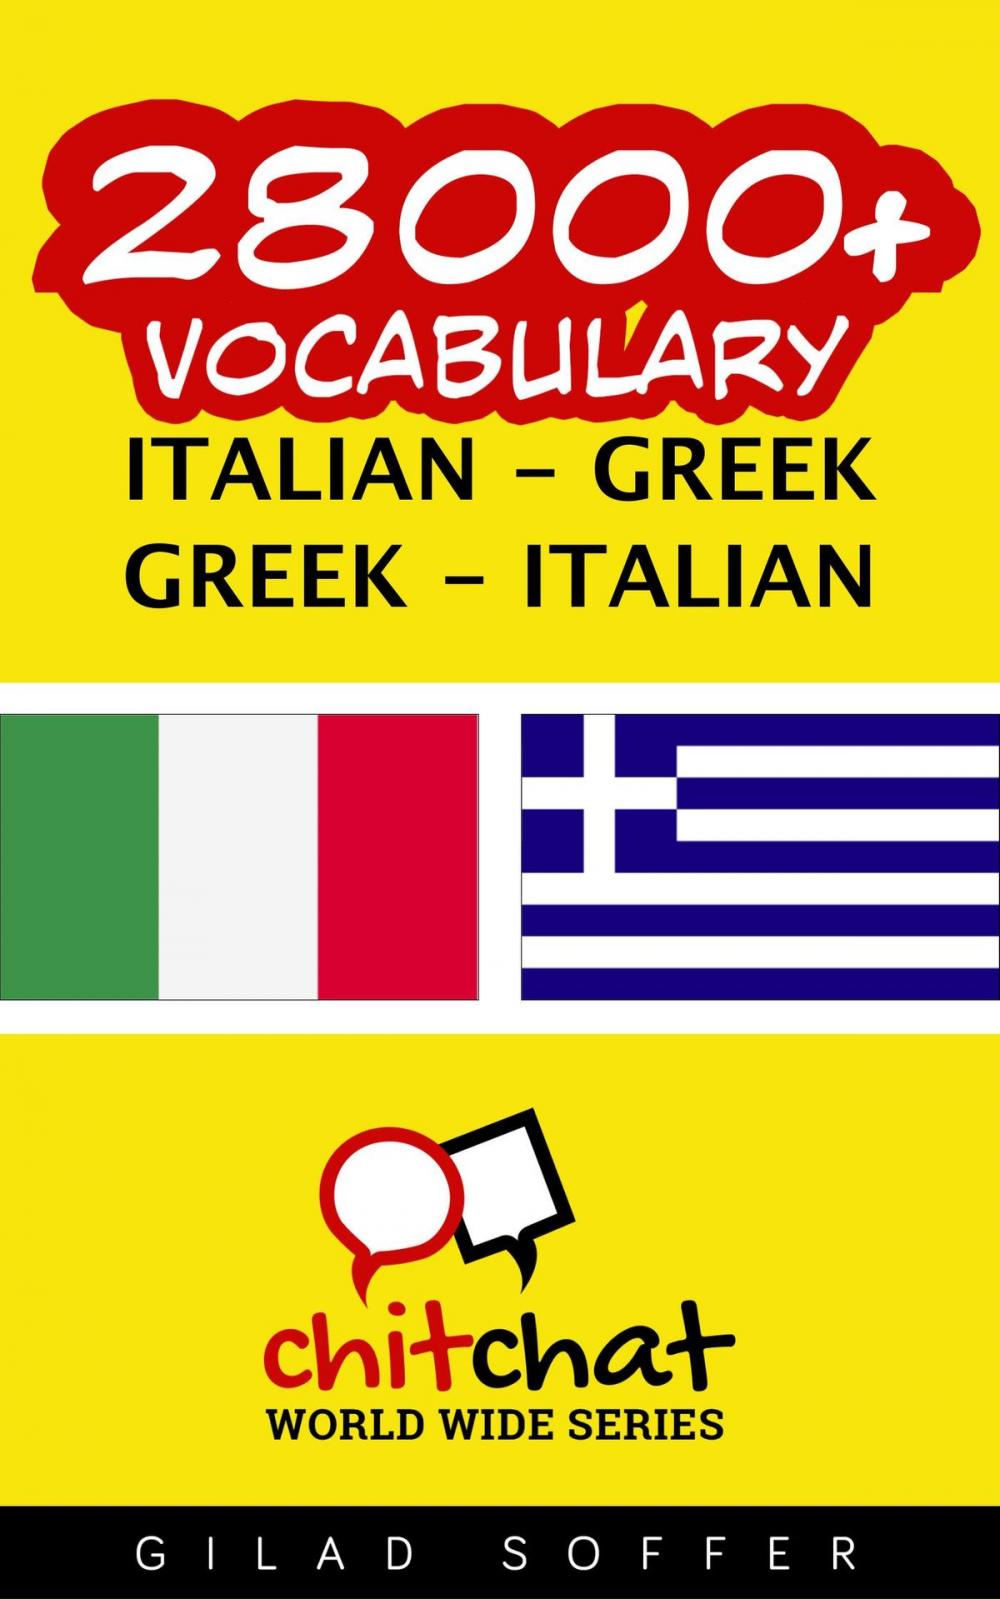 Big bigCover of 28000+ Vocabulary Italian - Greek